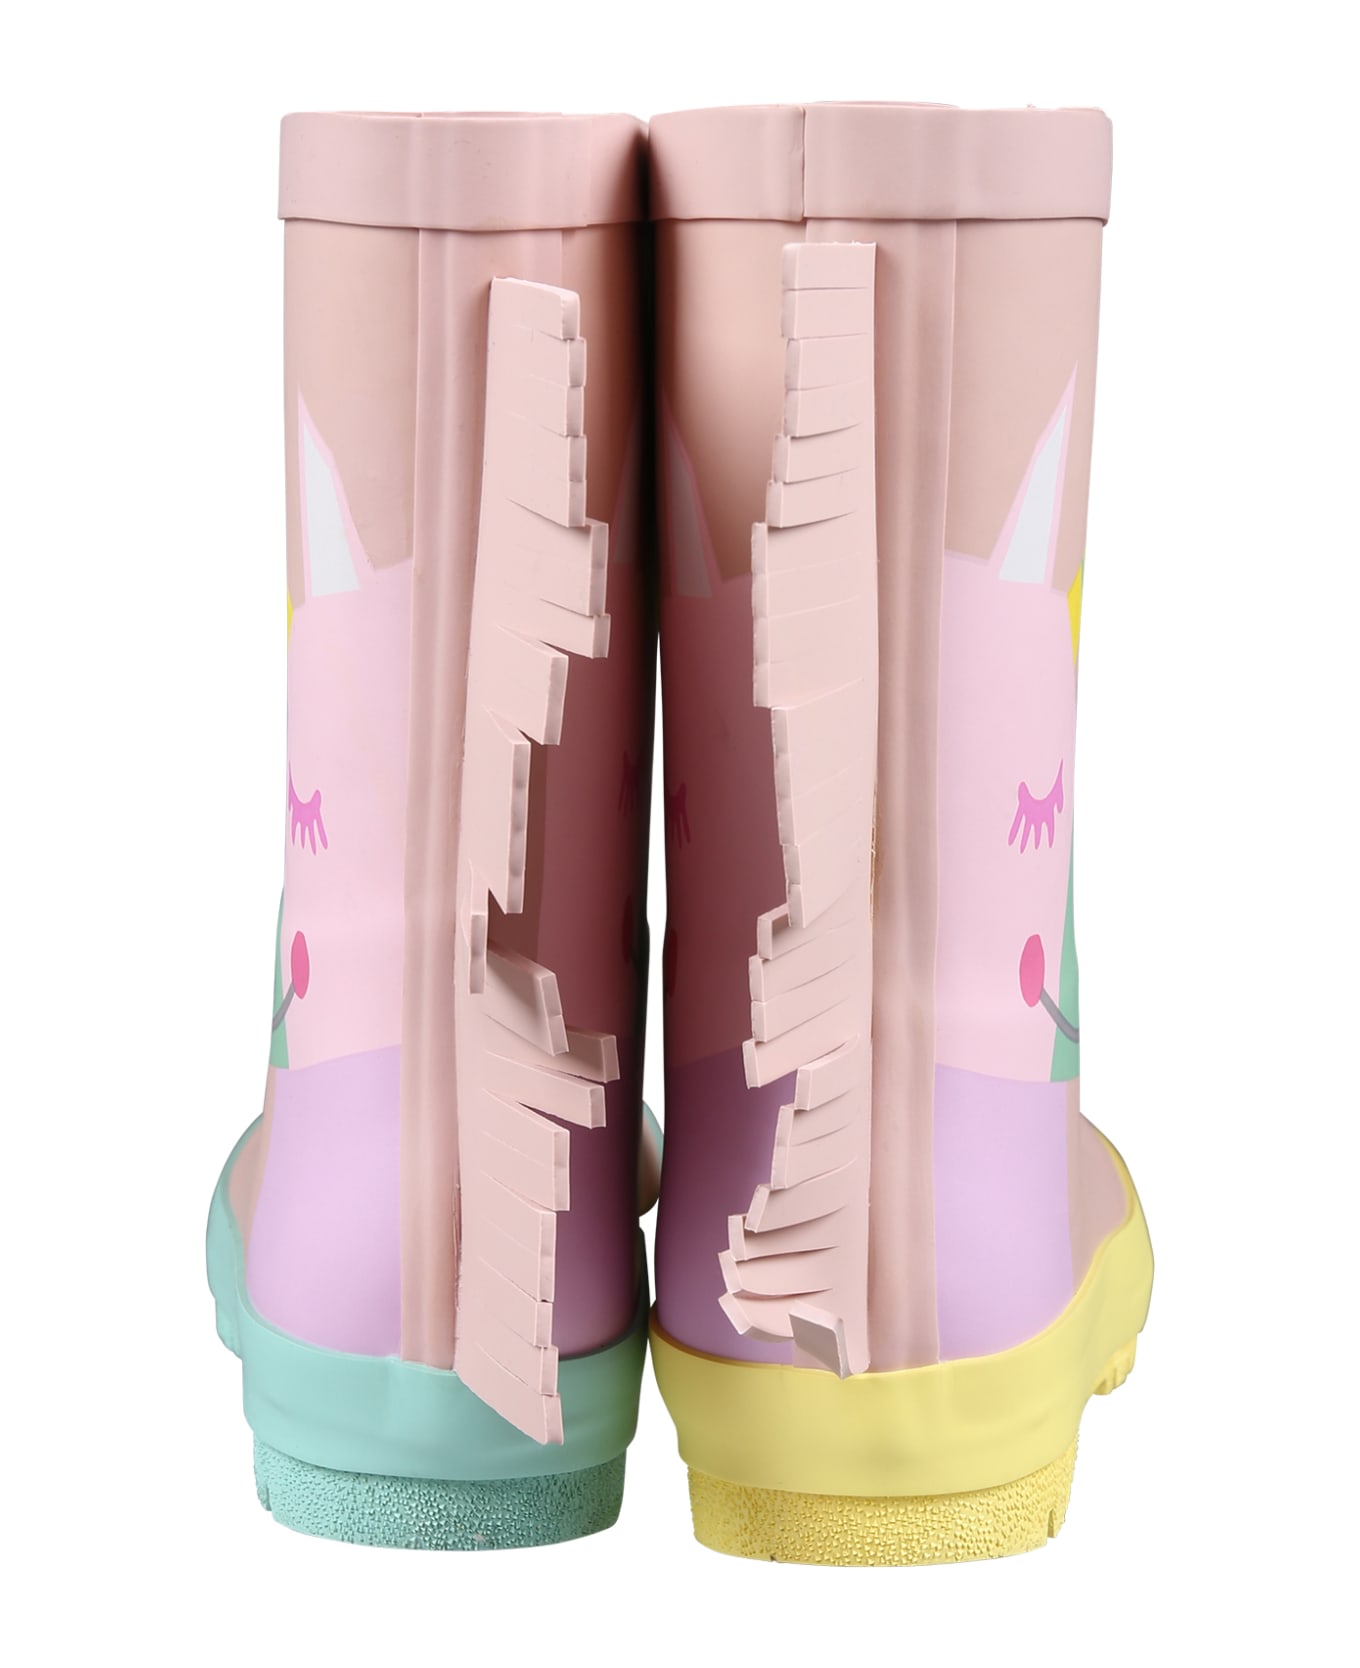 Stella McCartney Kids Pink Rain Boots For Girl With Unicorns - Pink